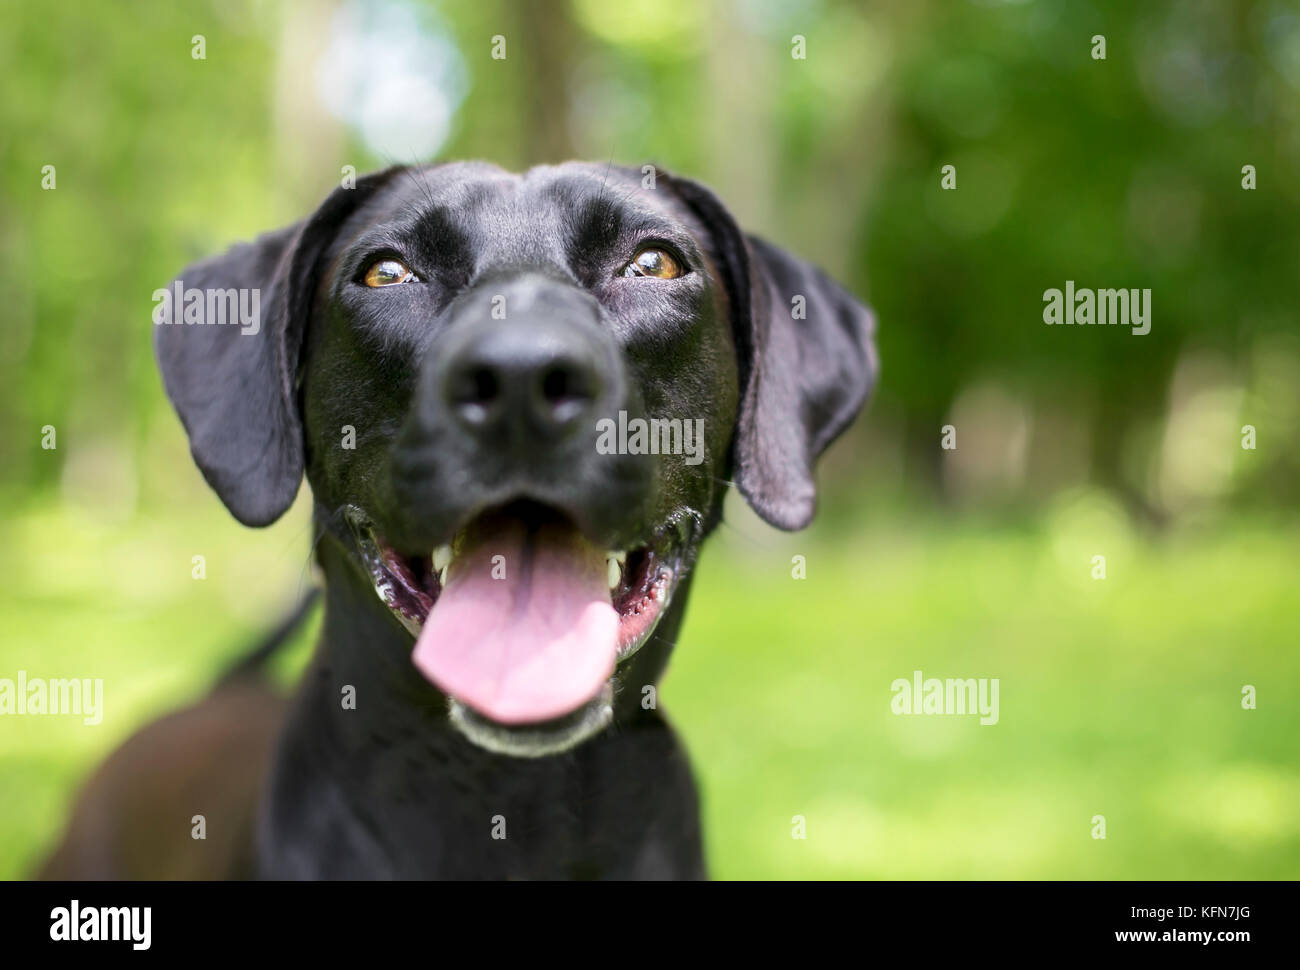 Close-up of a black Labrador Retriever dog avec une expression heureuse Banque D'Images